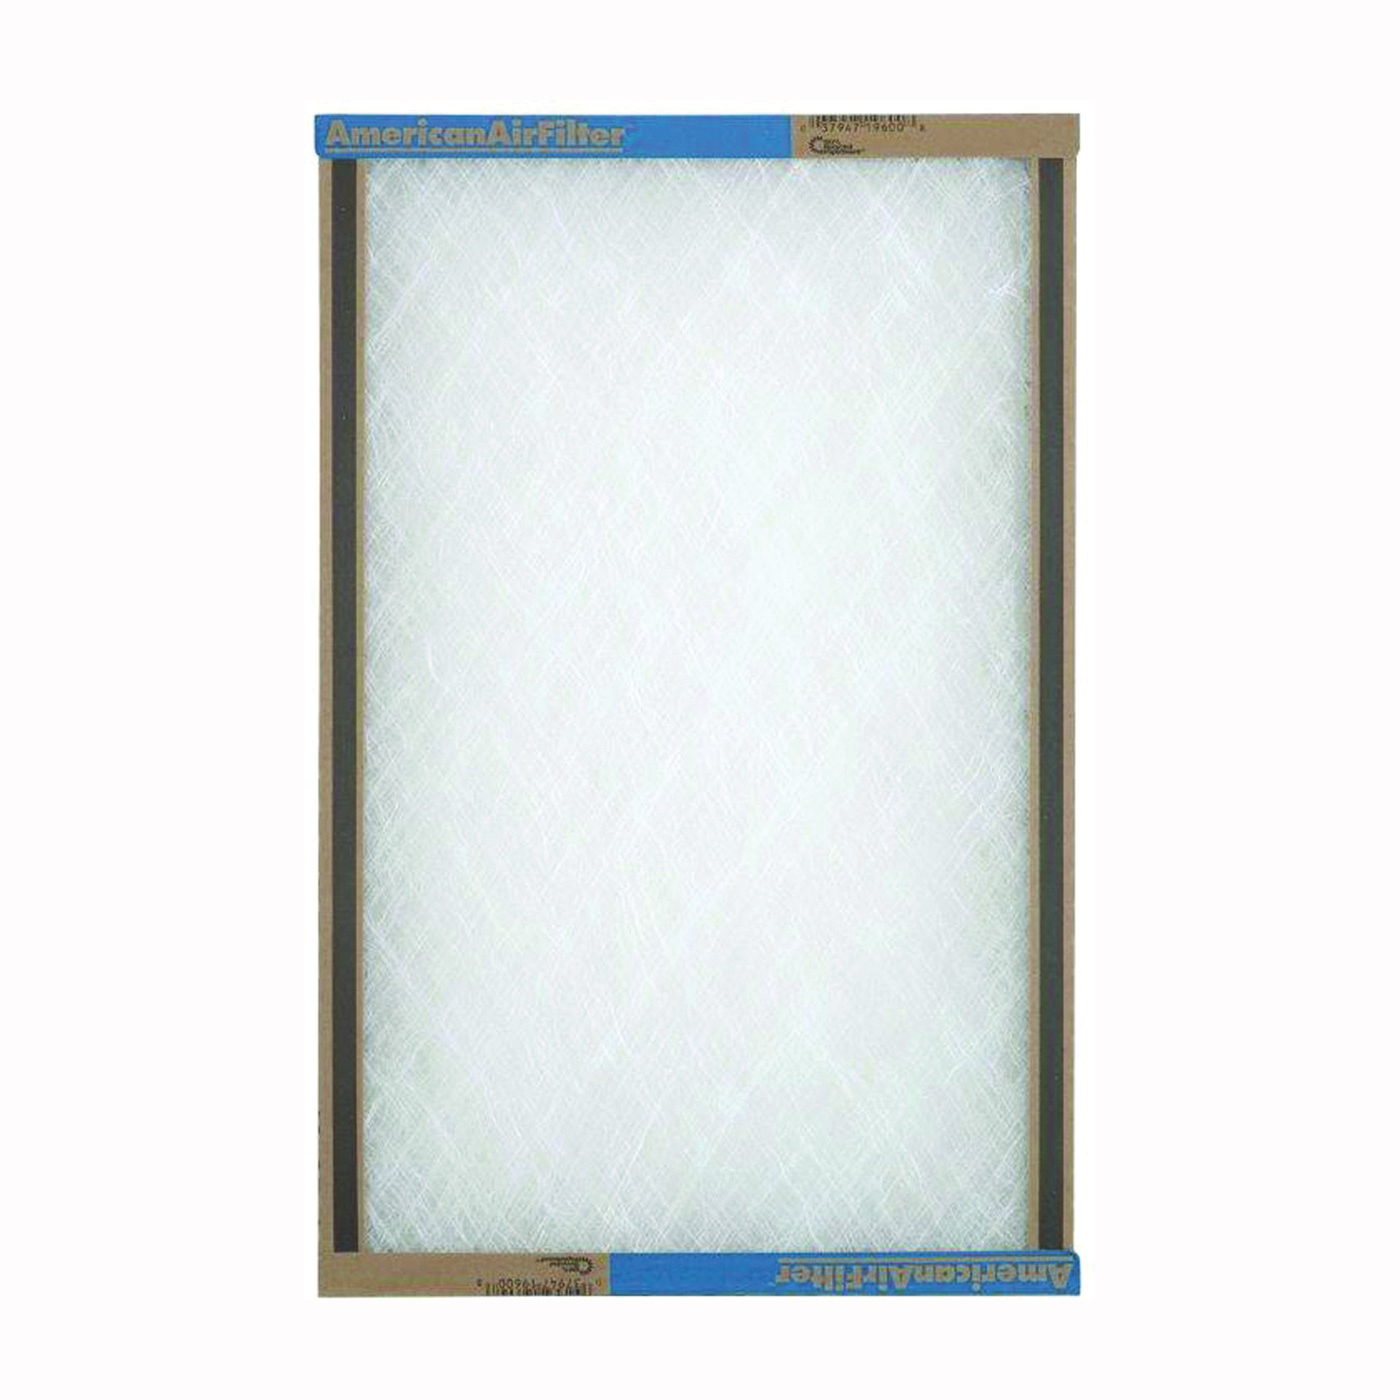 116241 Panel Air Filter, 24 x 16 x 1, Chipboard Frame